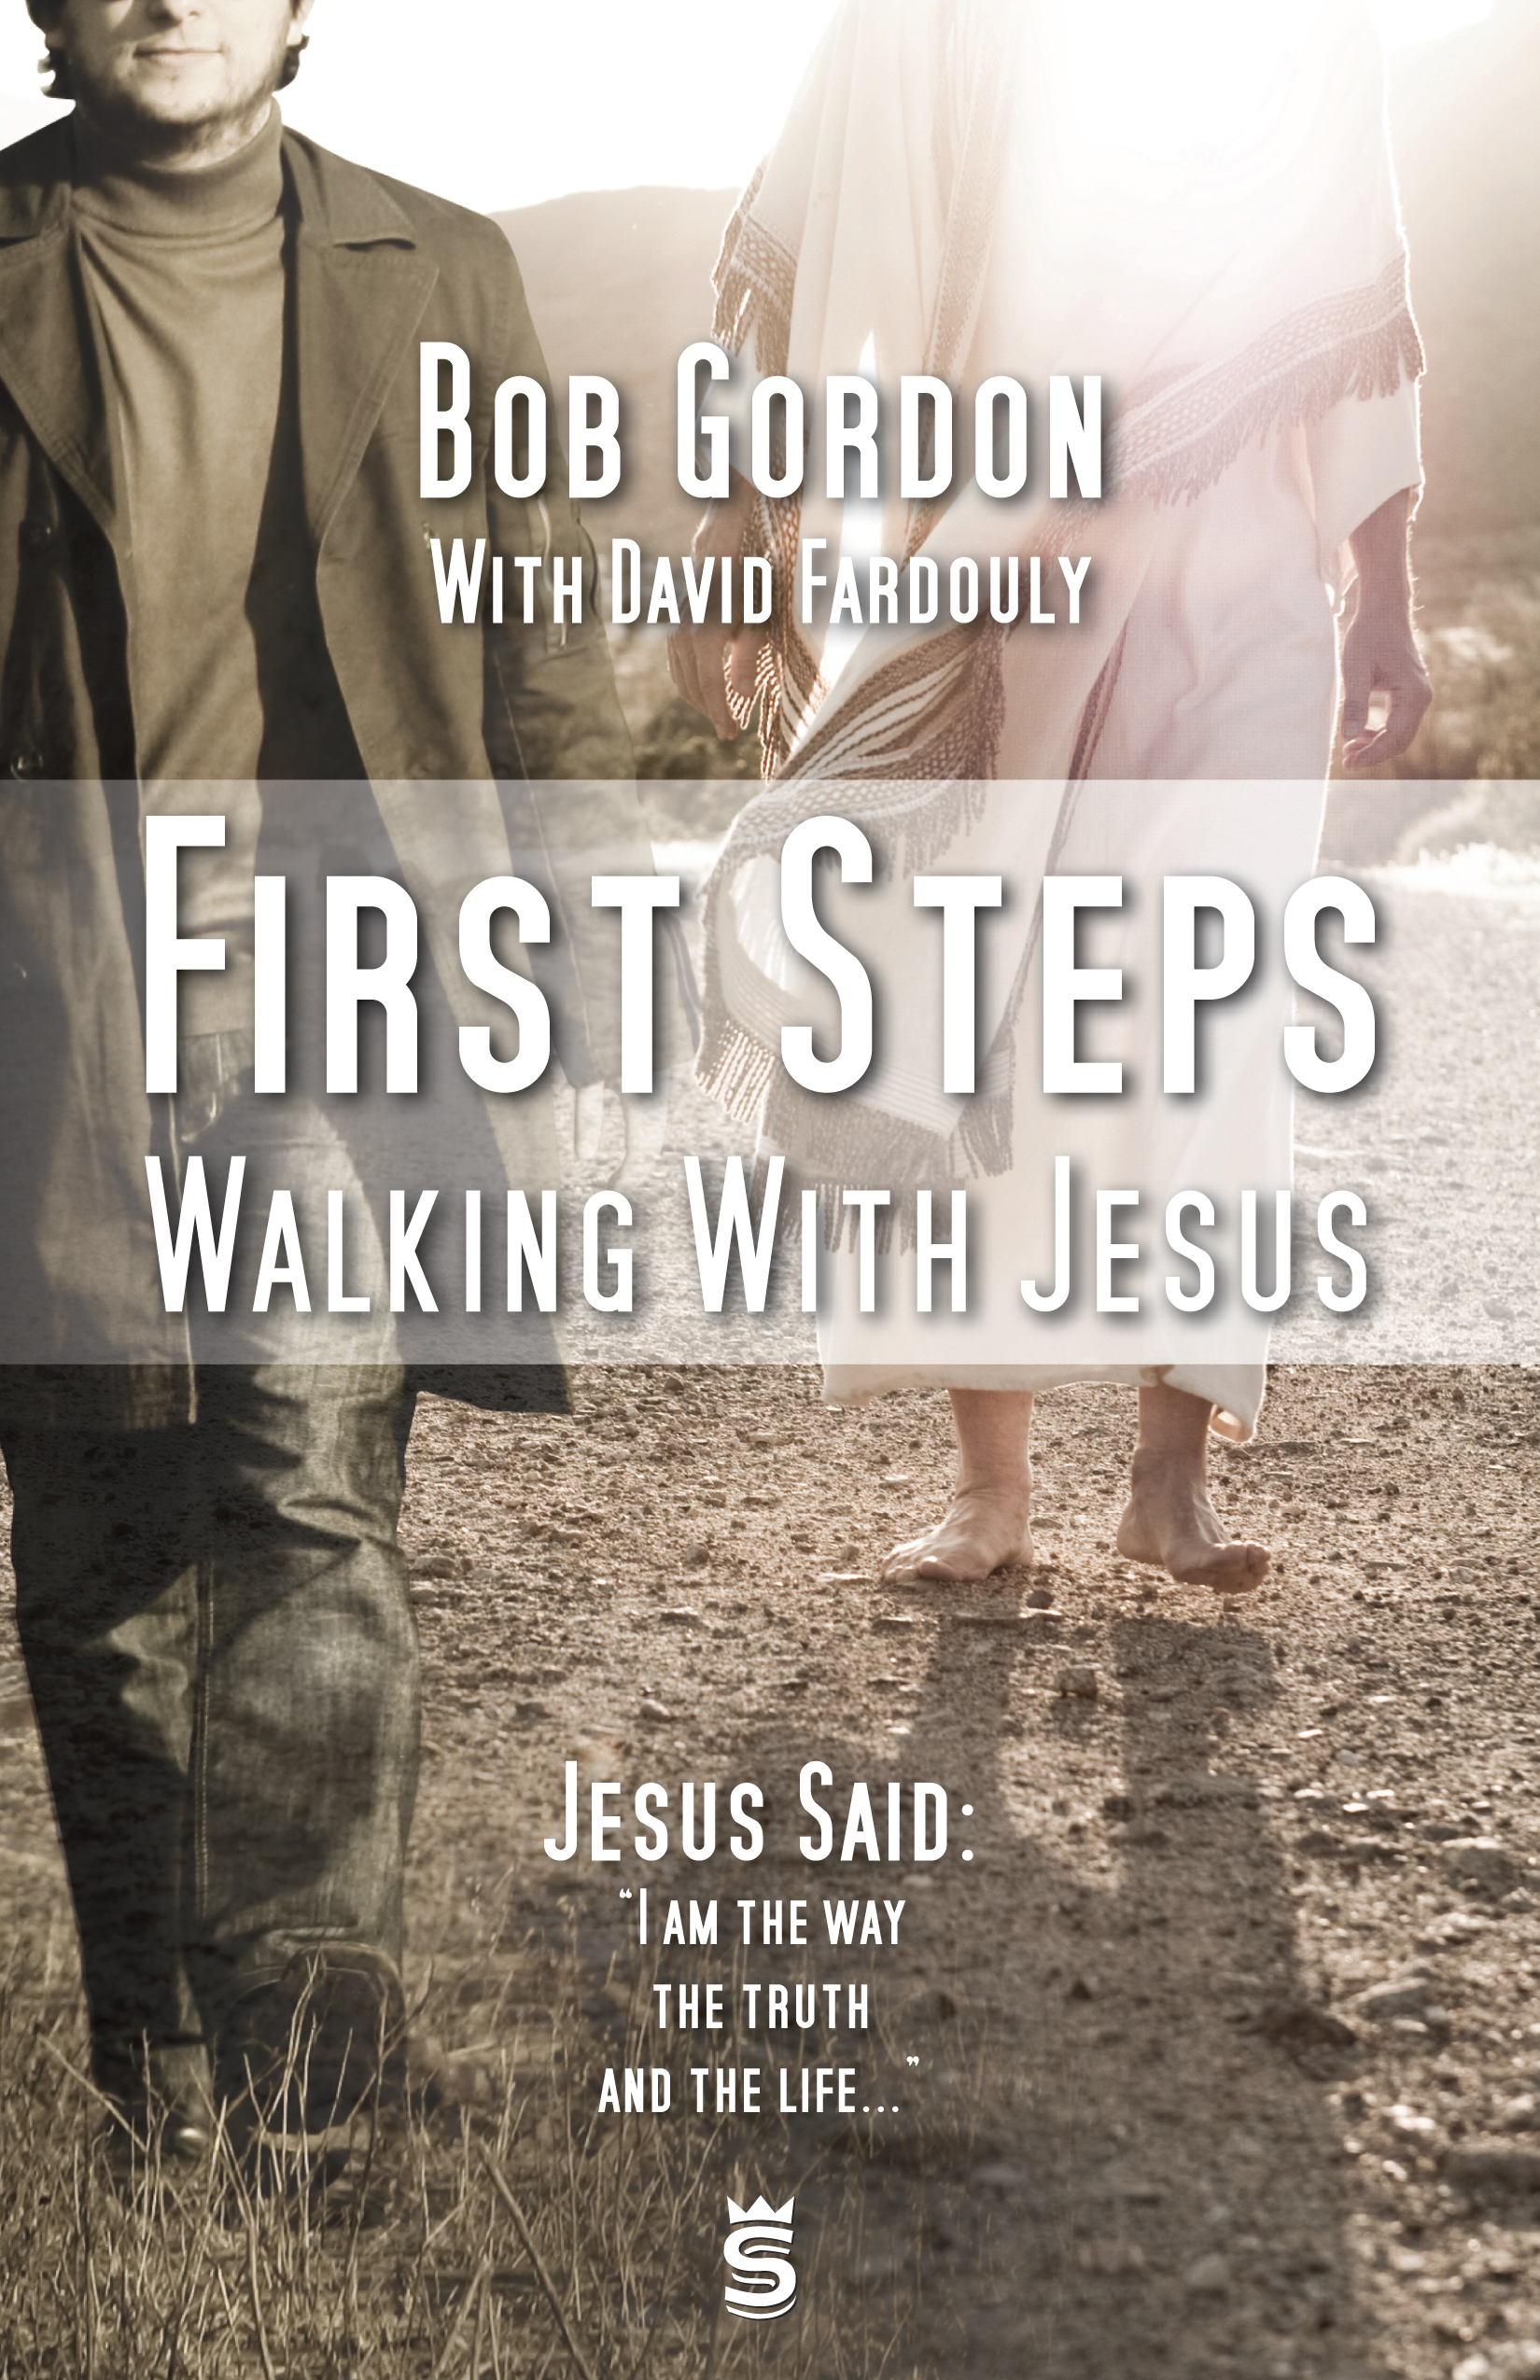 First Steps. Bob Gordon